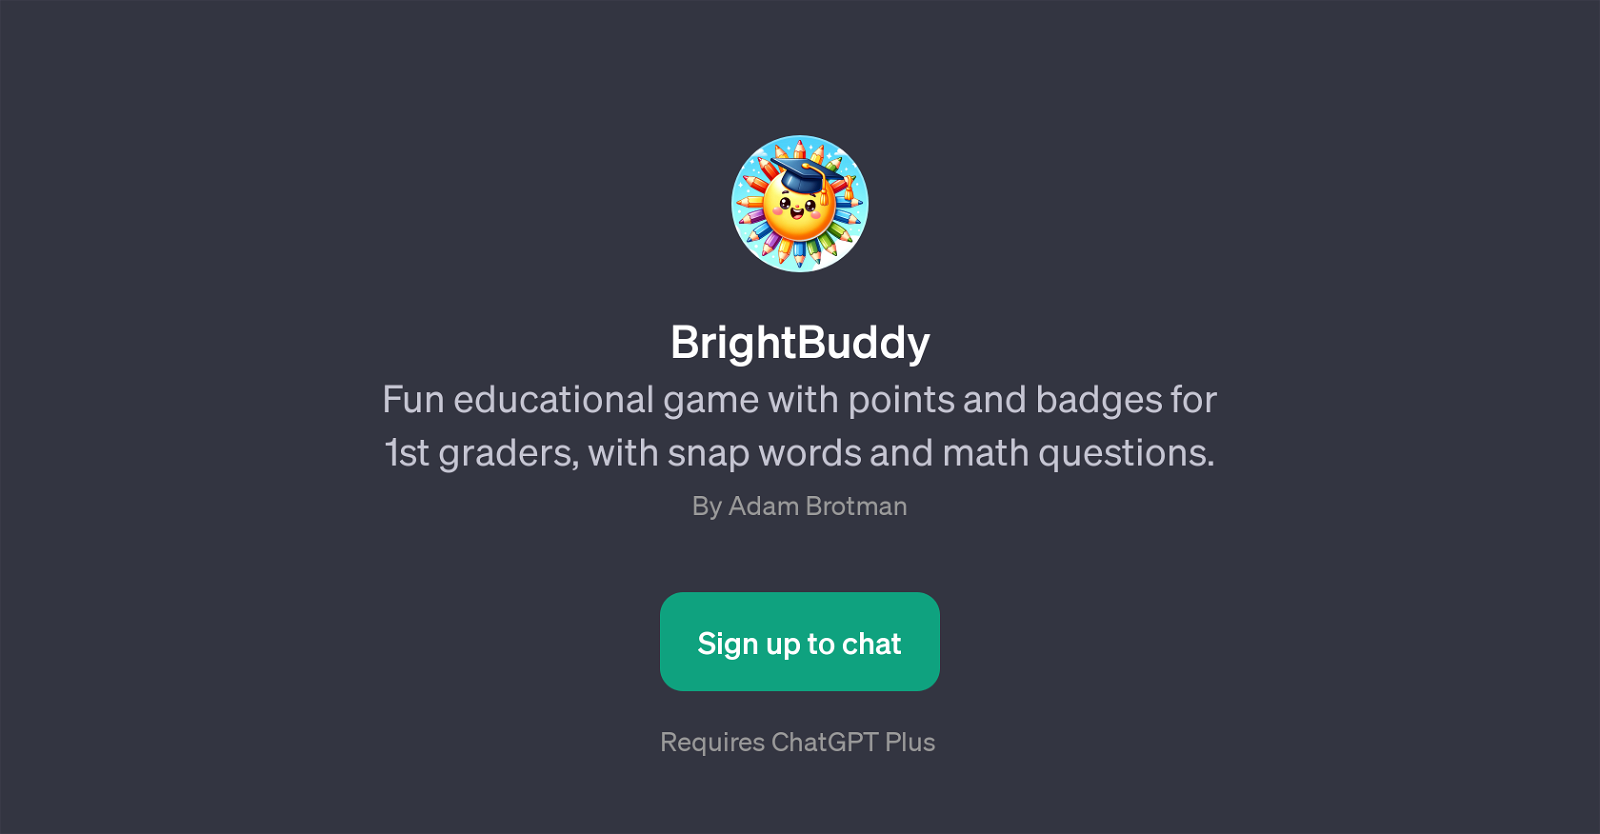 BrightBuddy website